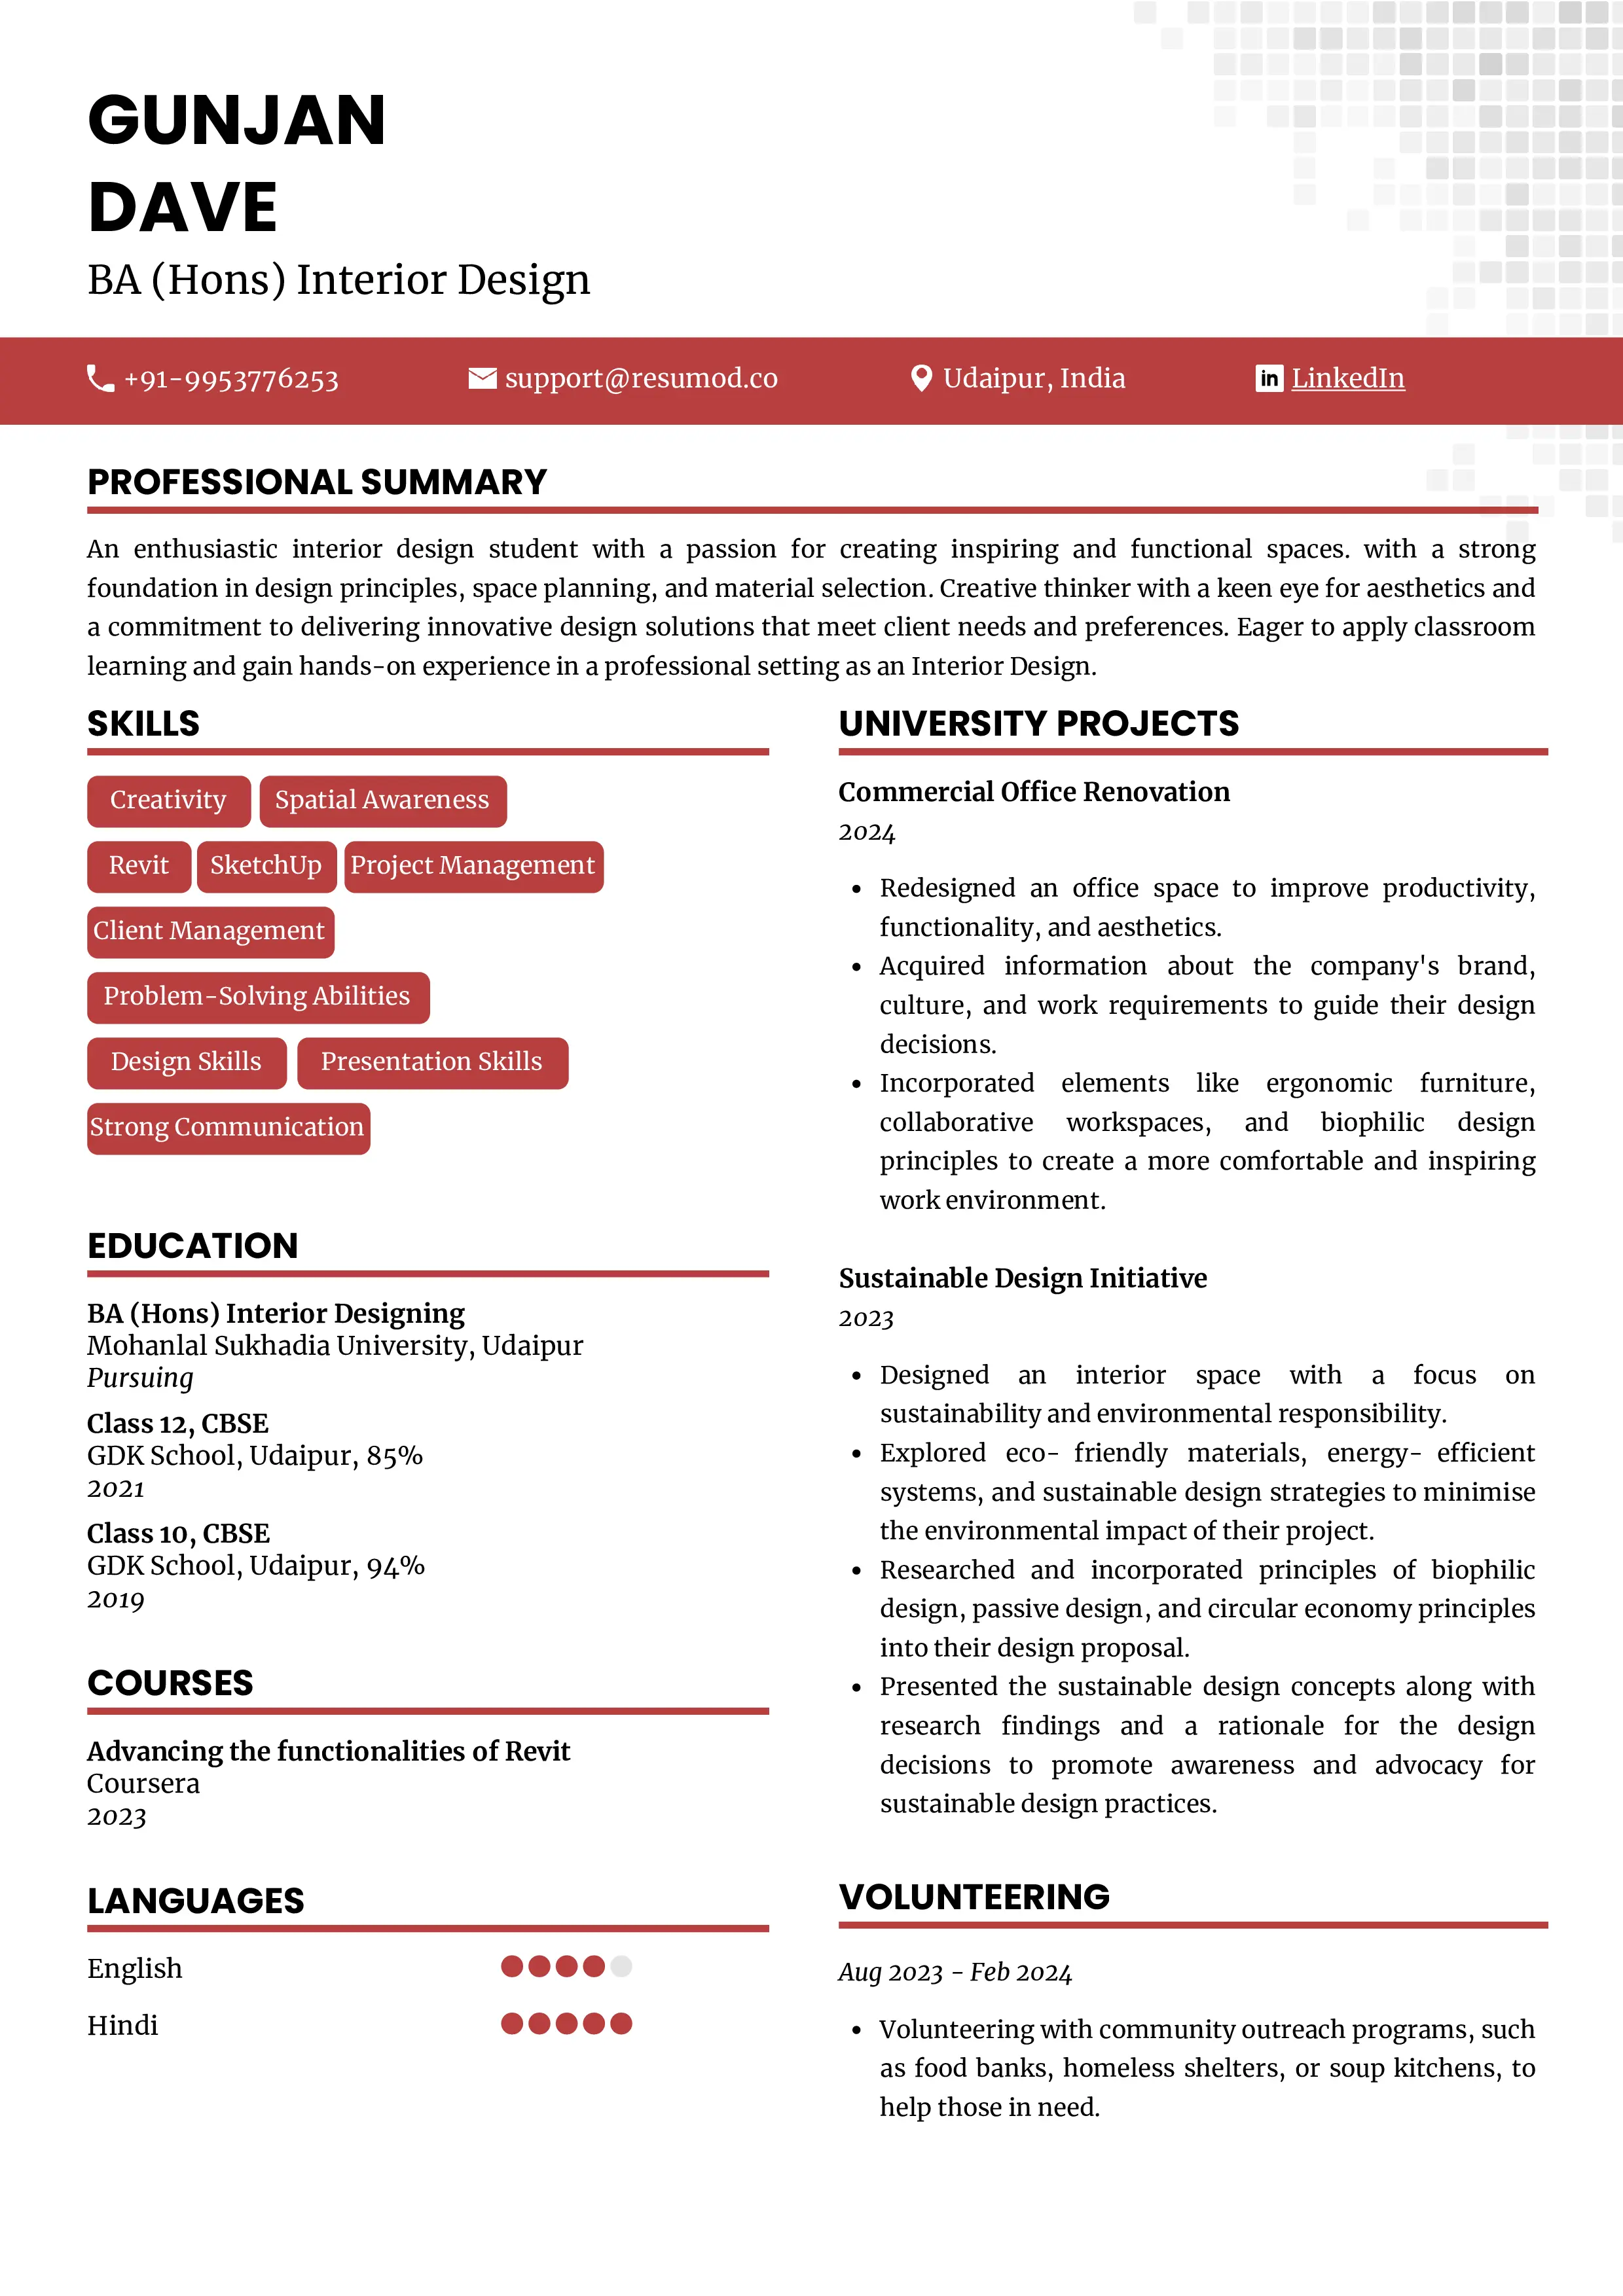 Sample Resume of BA (Hons) Interior Designer | Free Resume Templates & Samples on Resumod.co